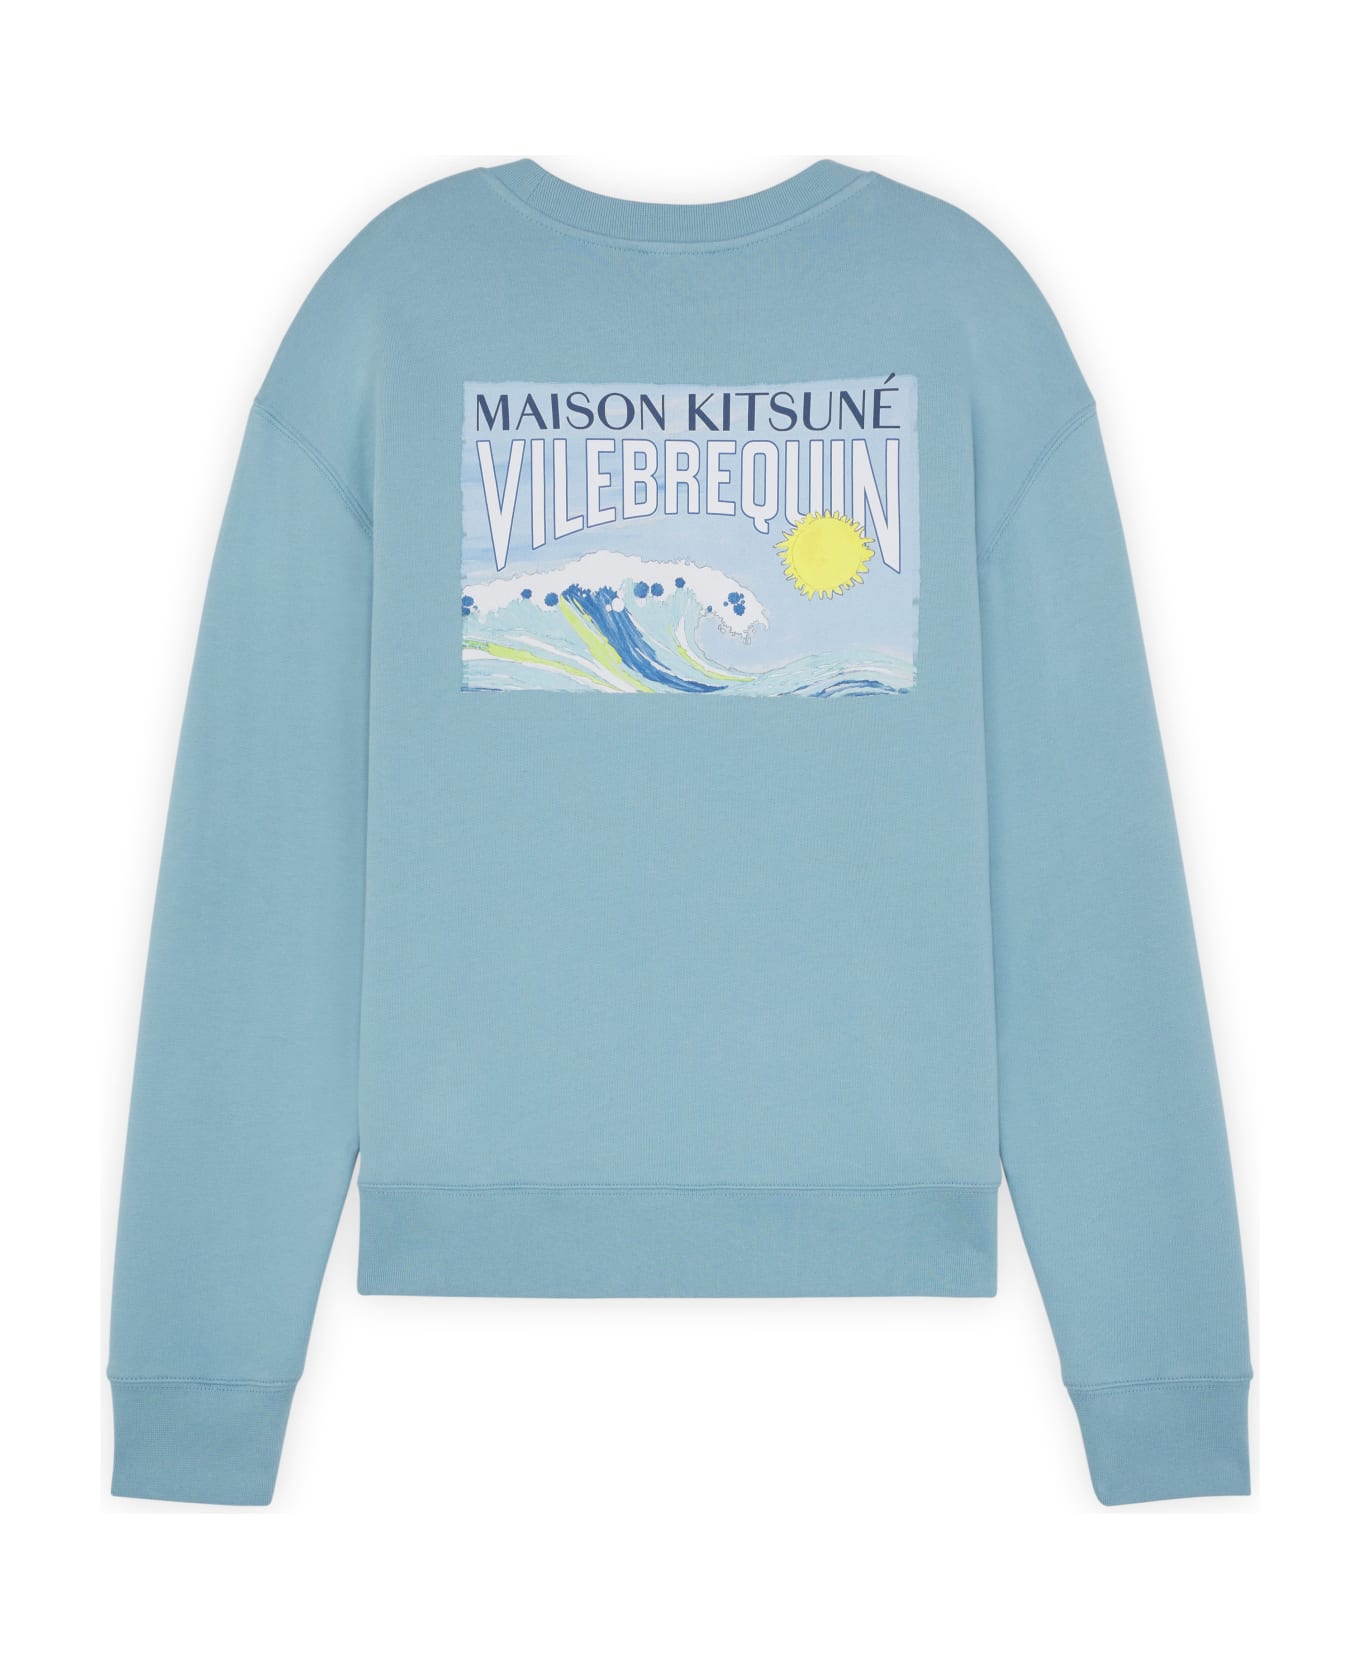 Maison Kitsuné X Vilebrequin Comfort Sweatshirt - Breeze フリース